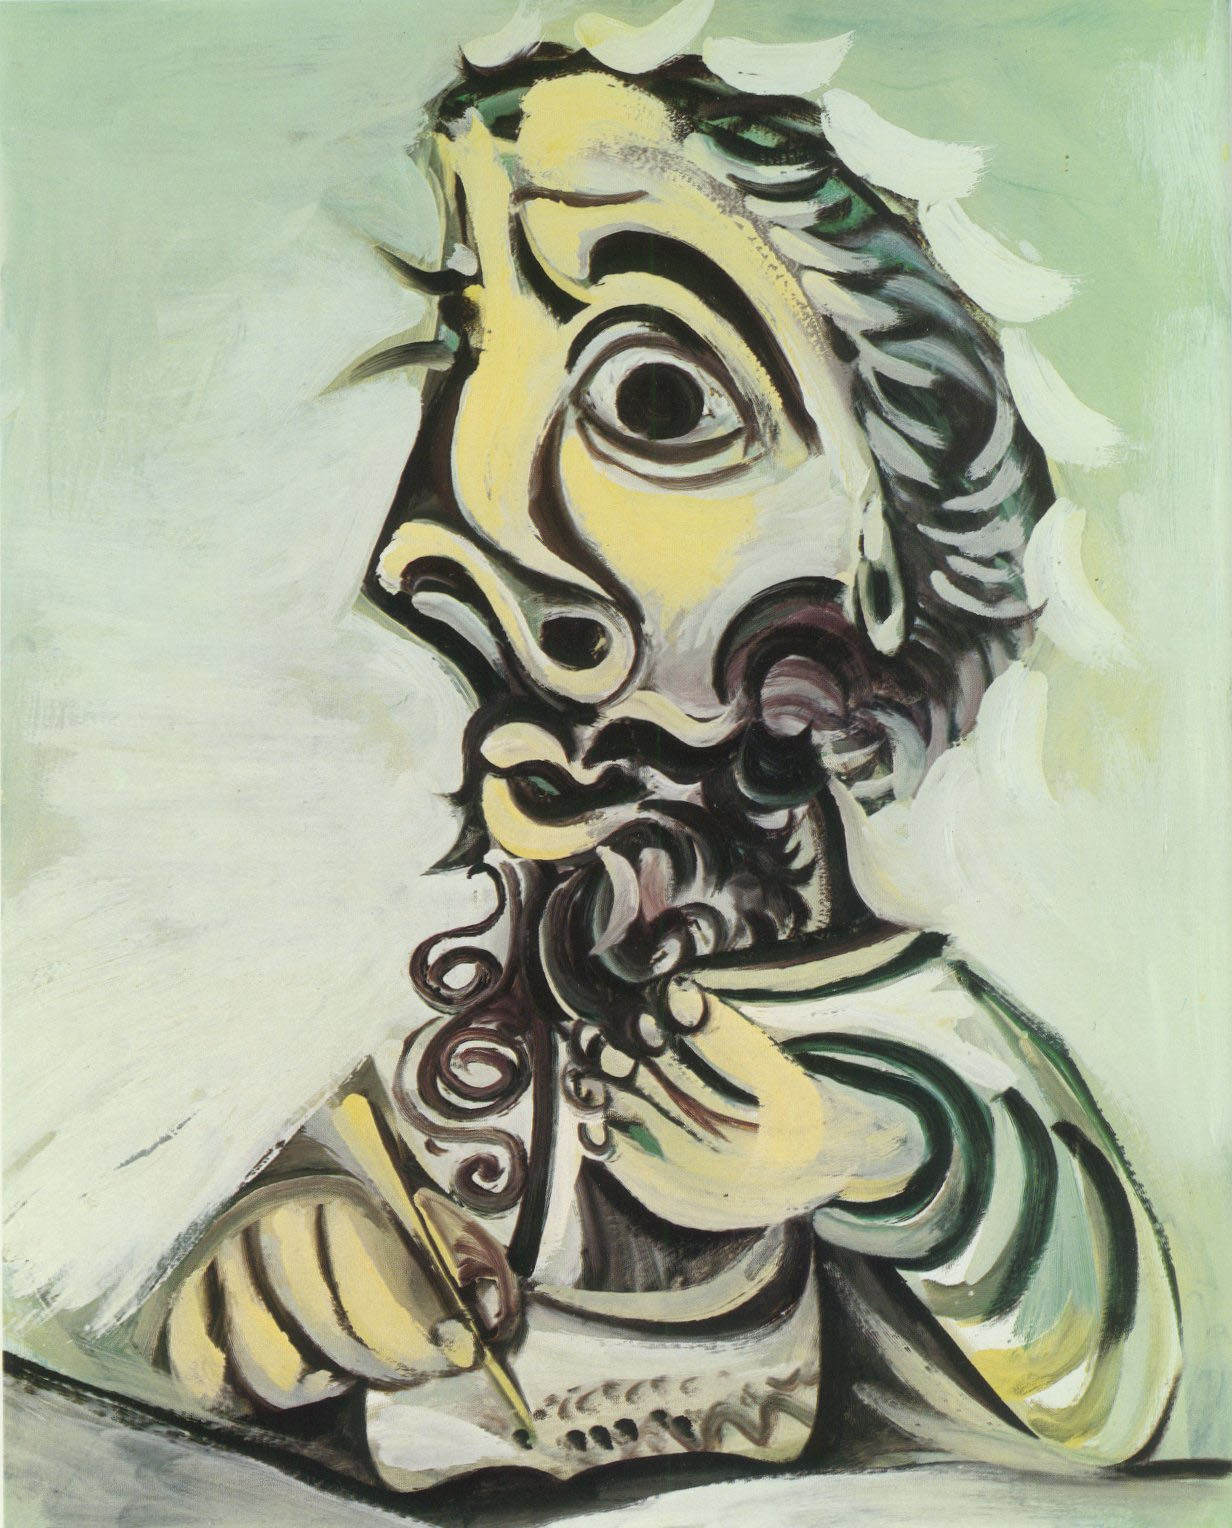 Пабло Пикассо. "Бюст пишущего мужчины". 1971. Музей Пикассо, Париж.